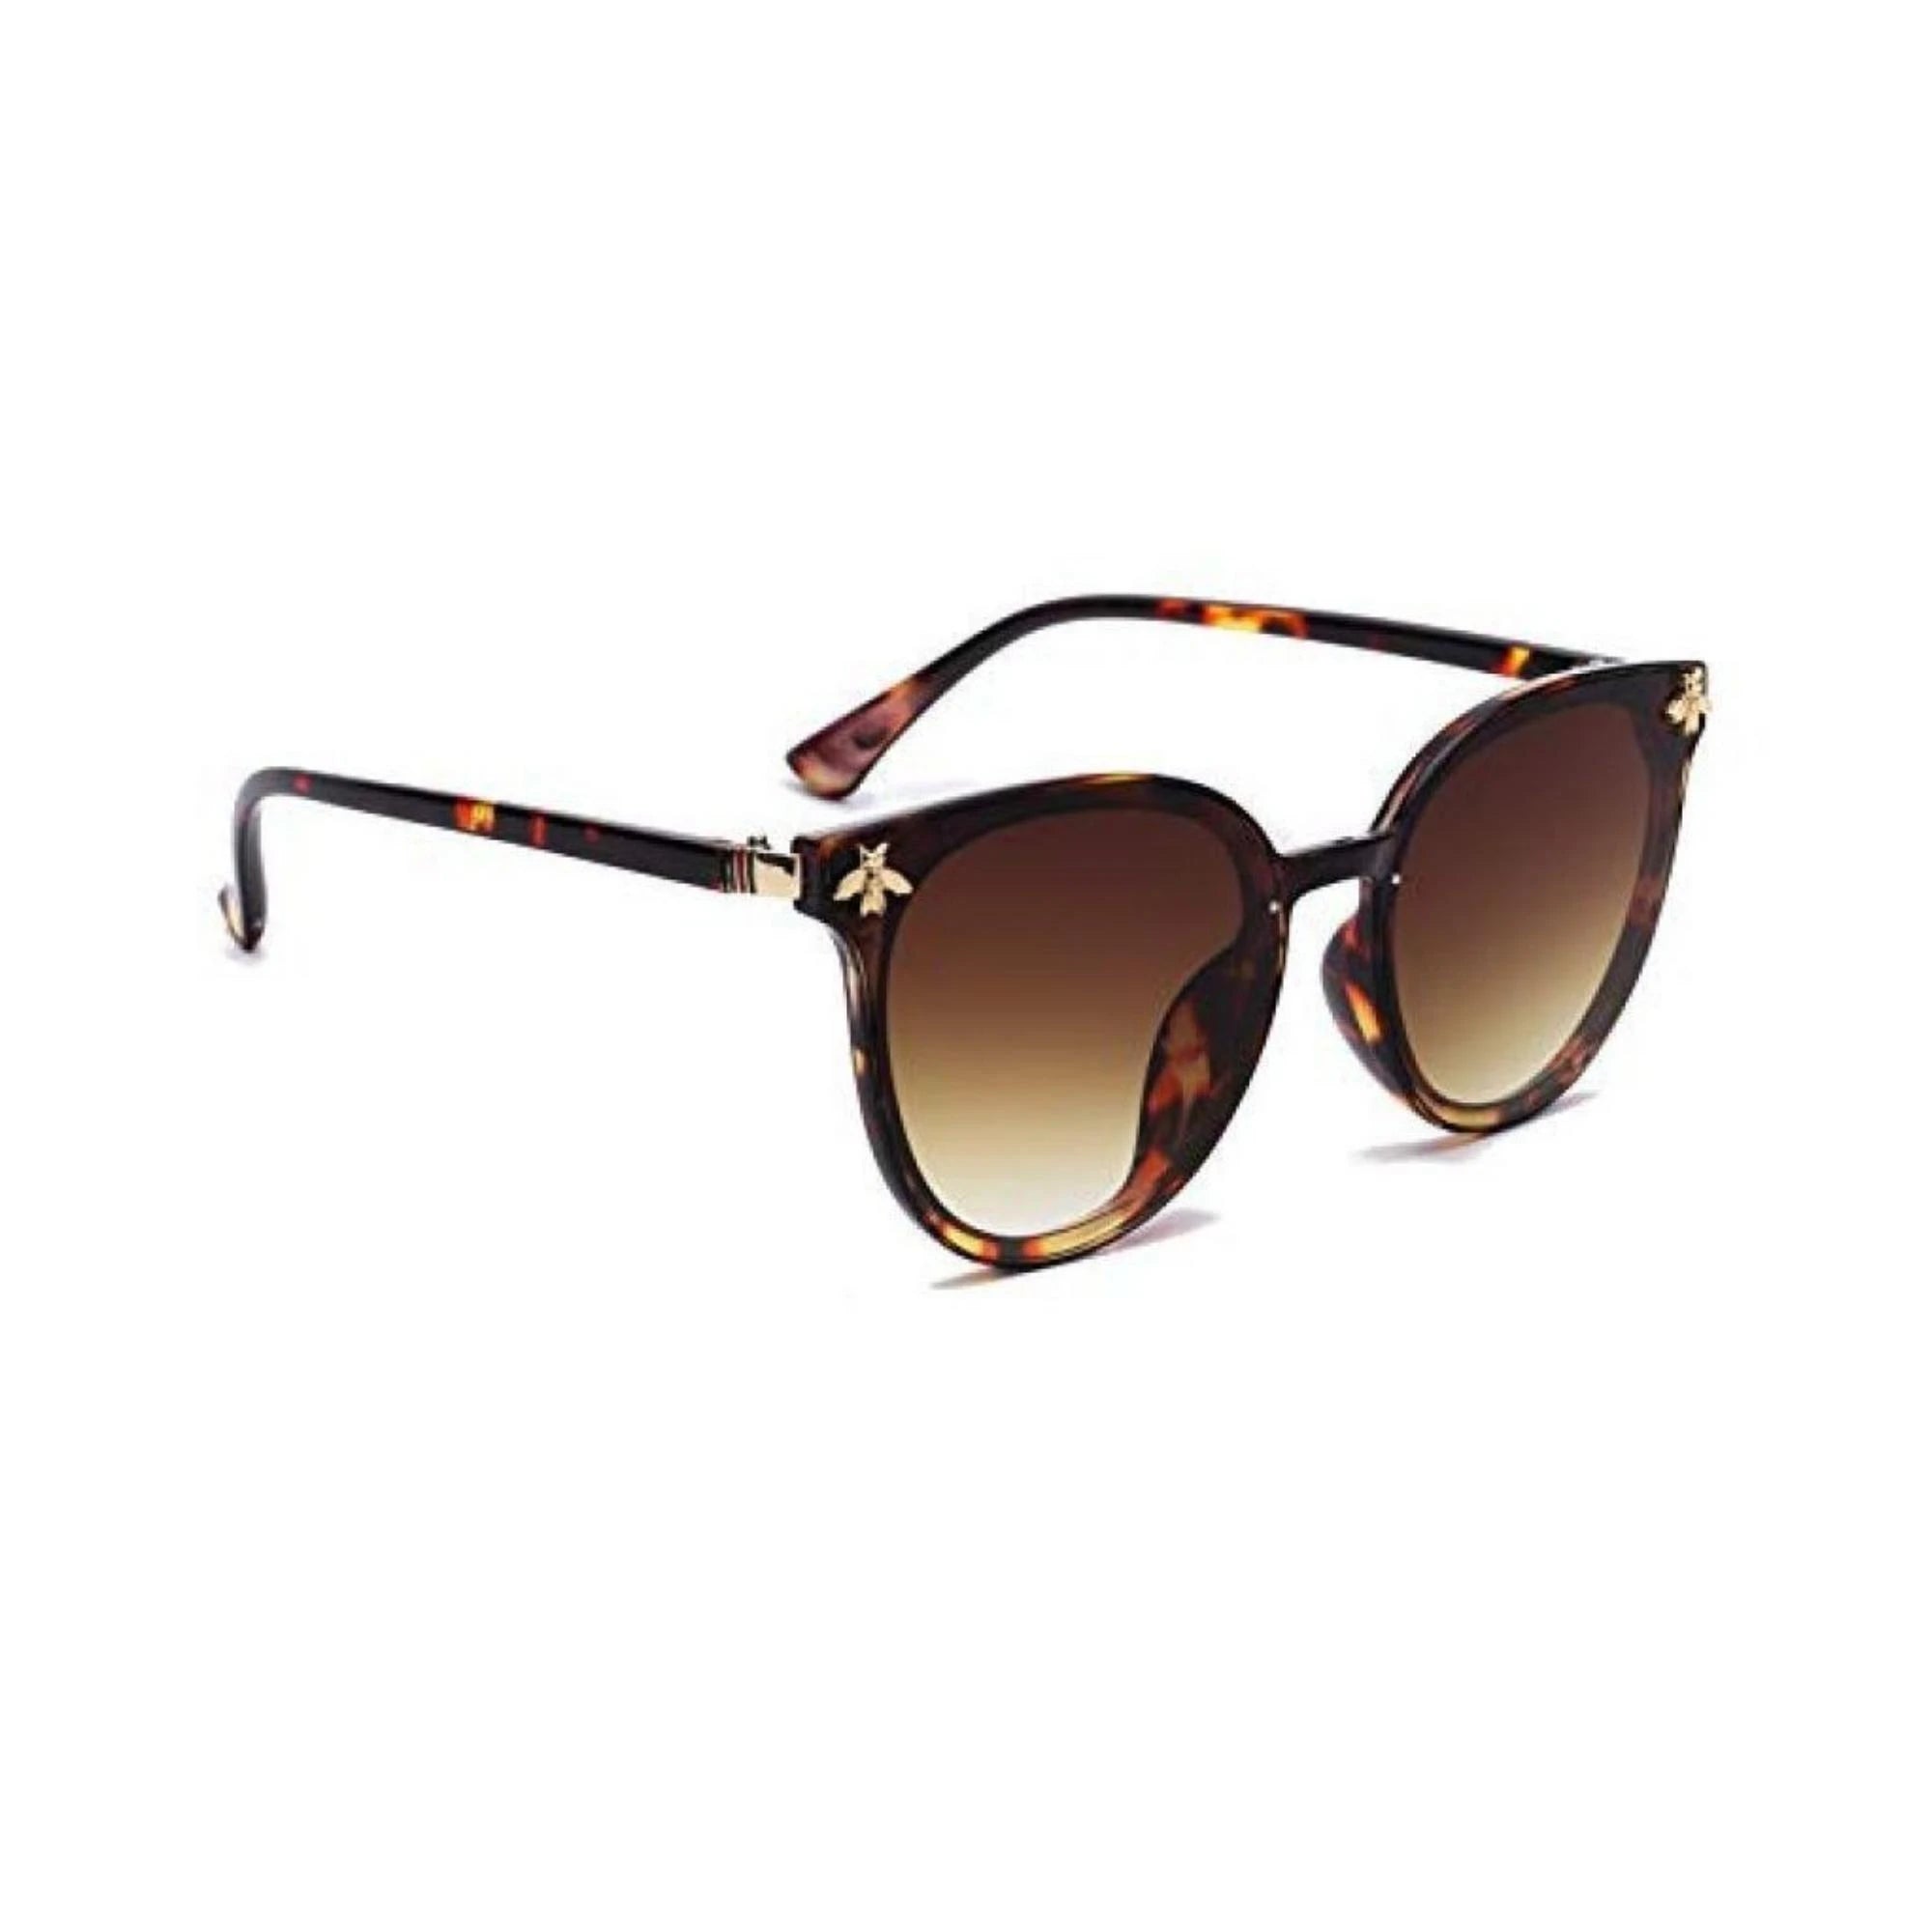 Queen Bee Oval Sunglasses For Women - Leopard Print